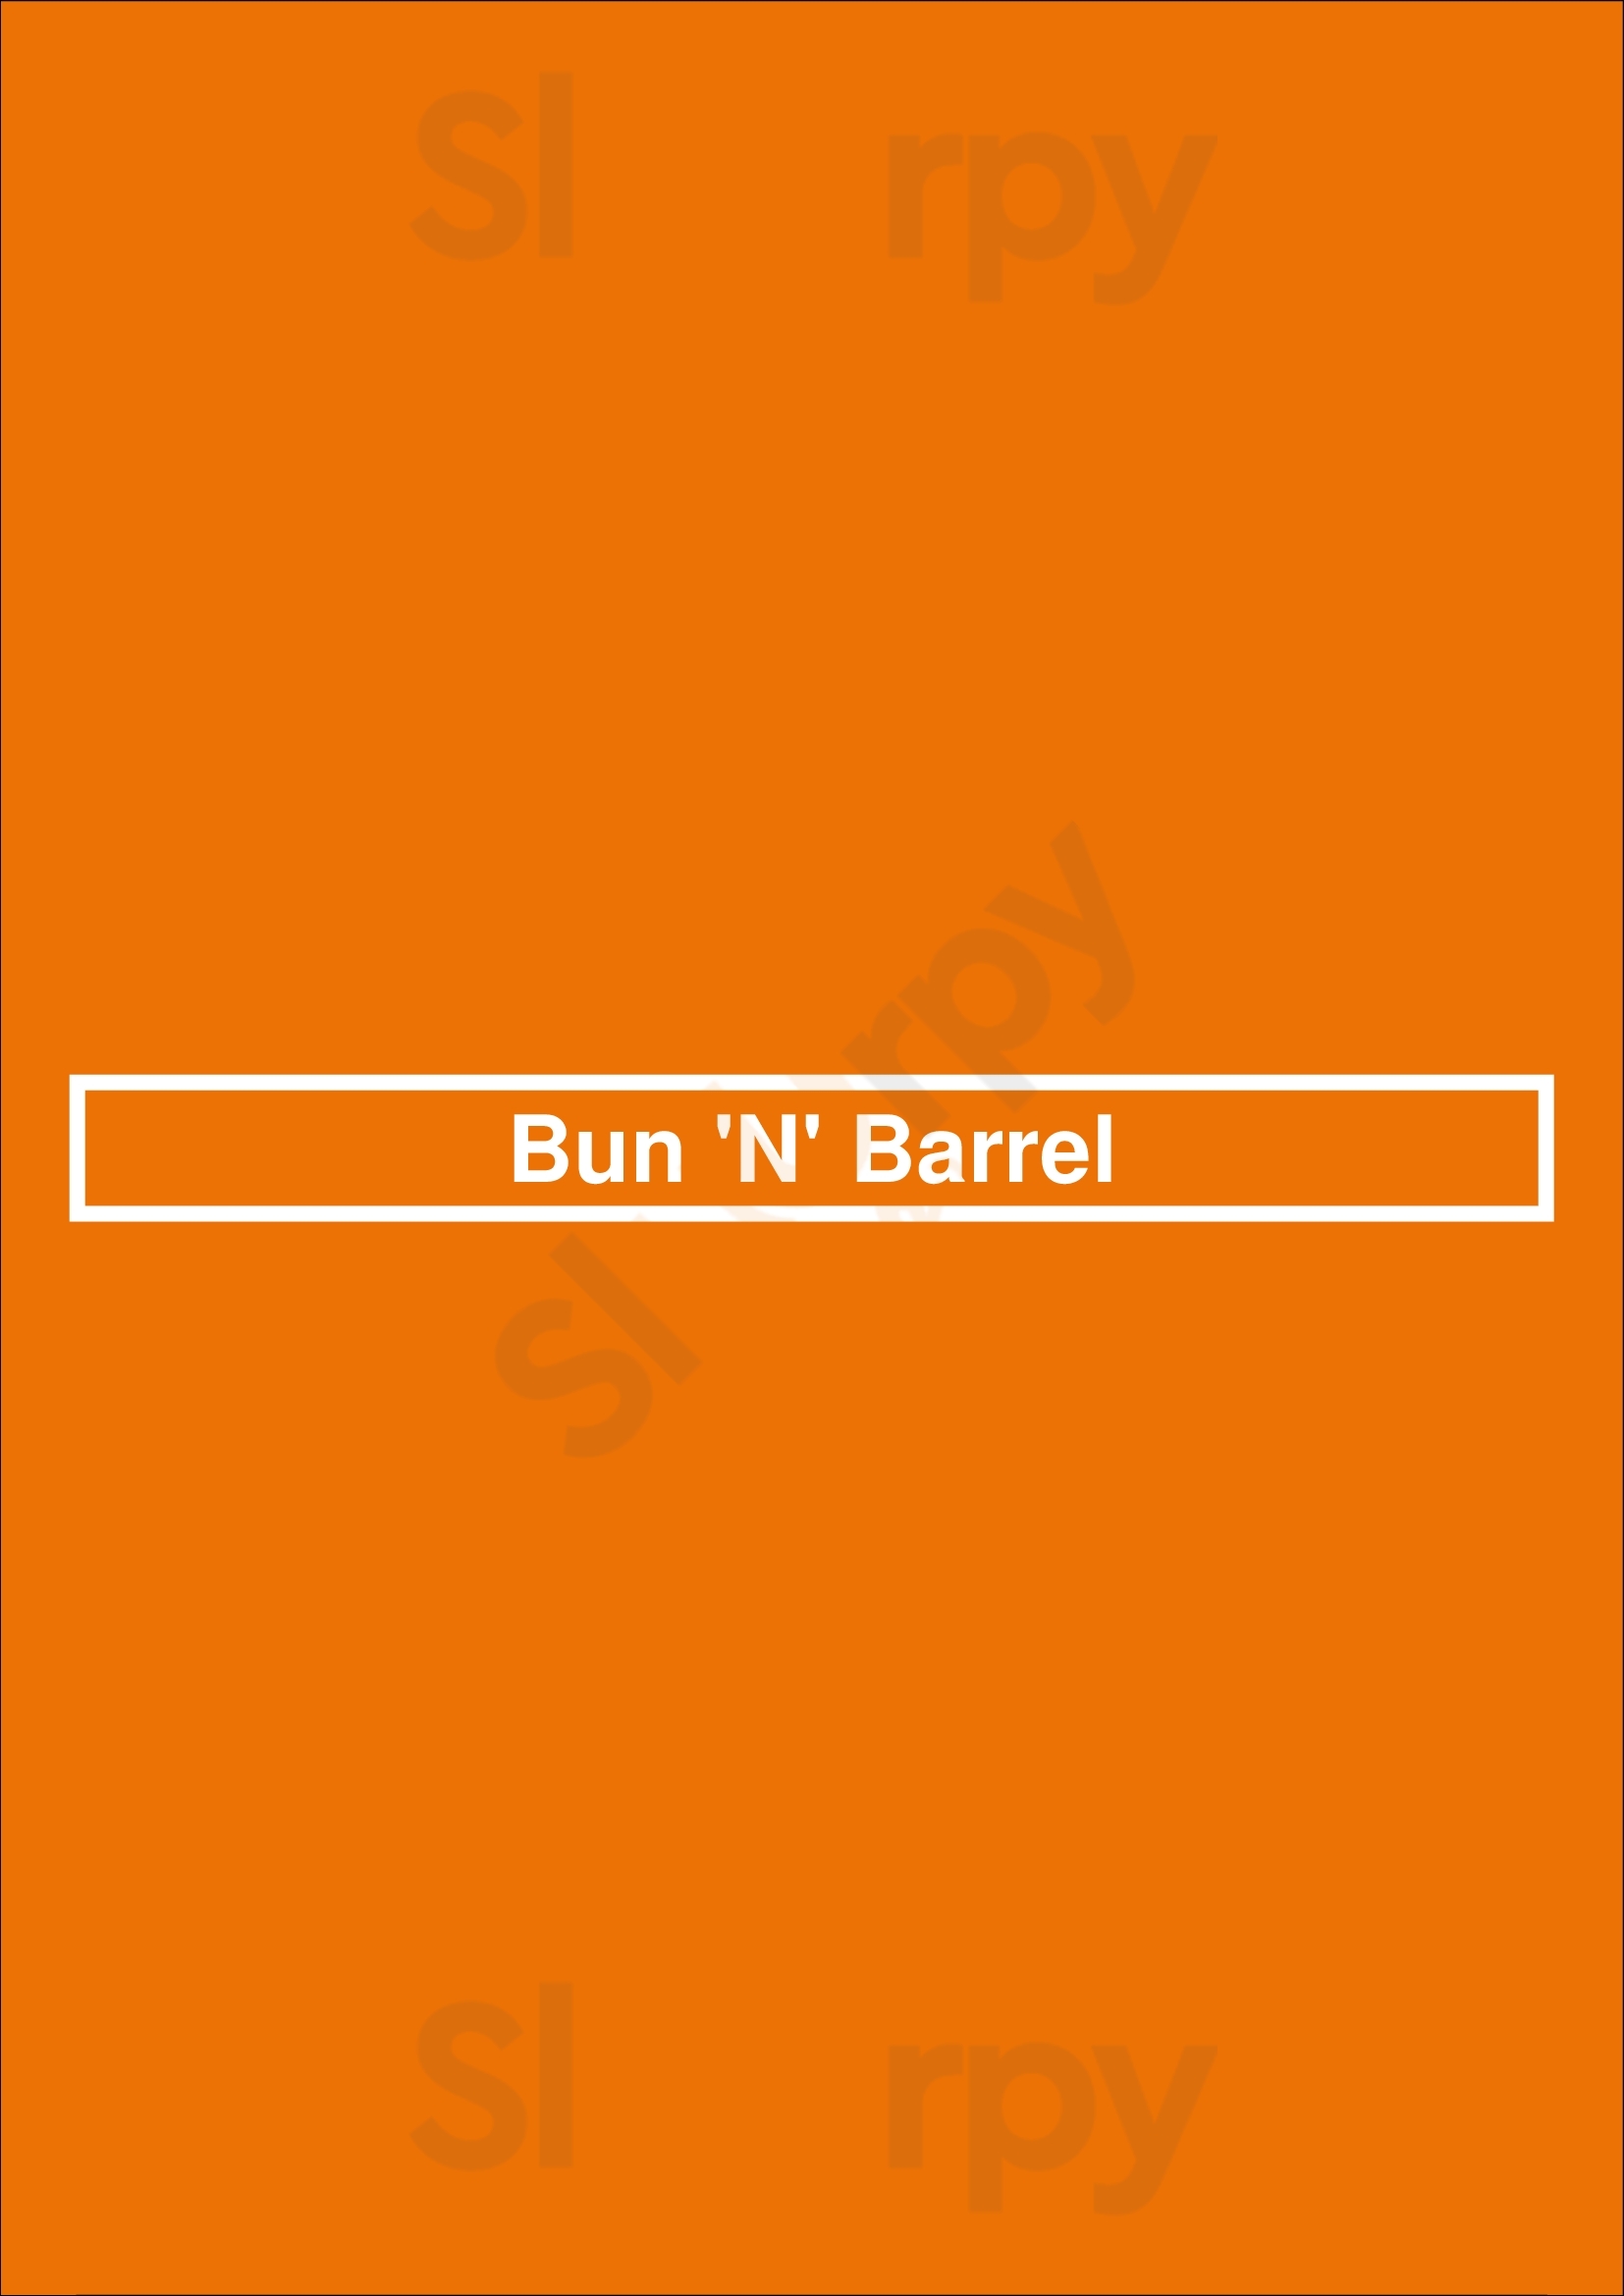 Bun 'n' Barrel San Antonio Menu - 1